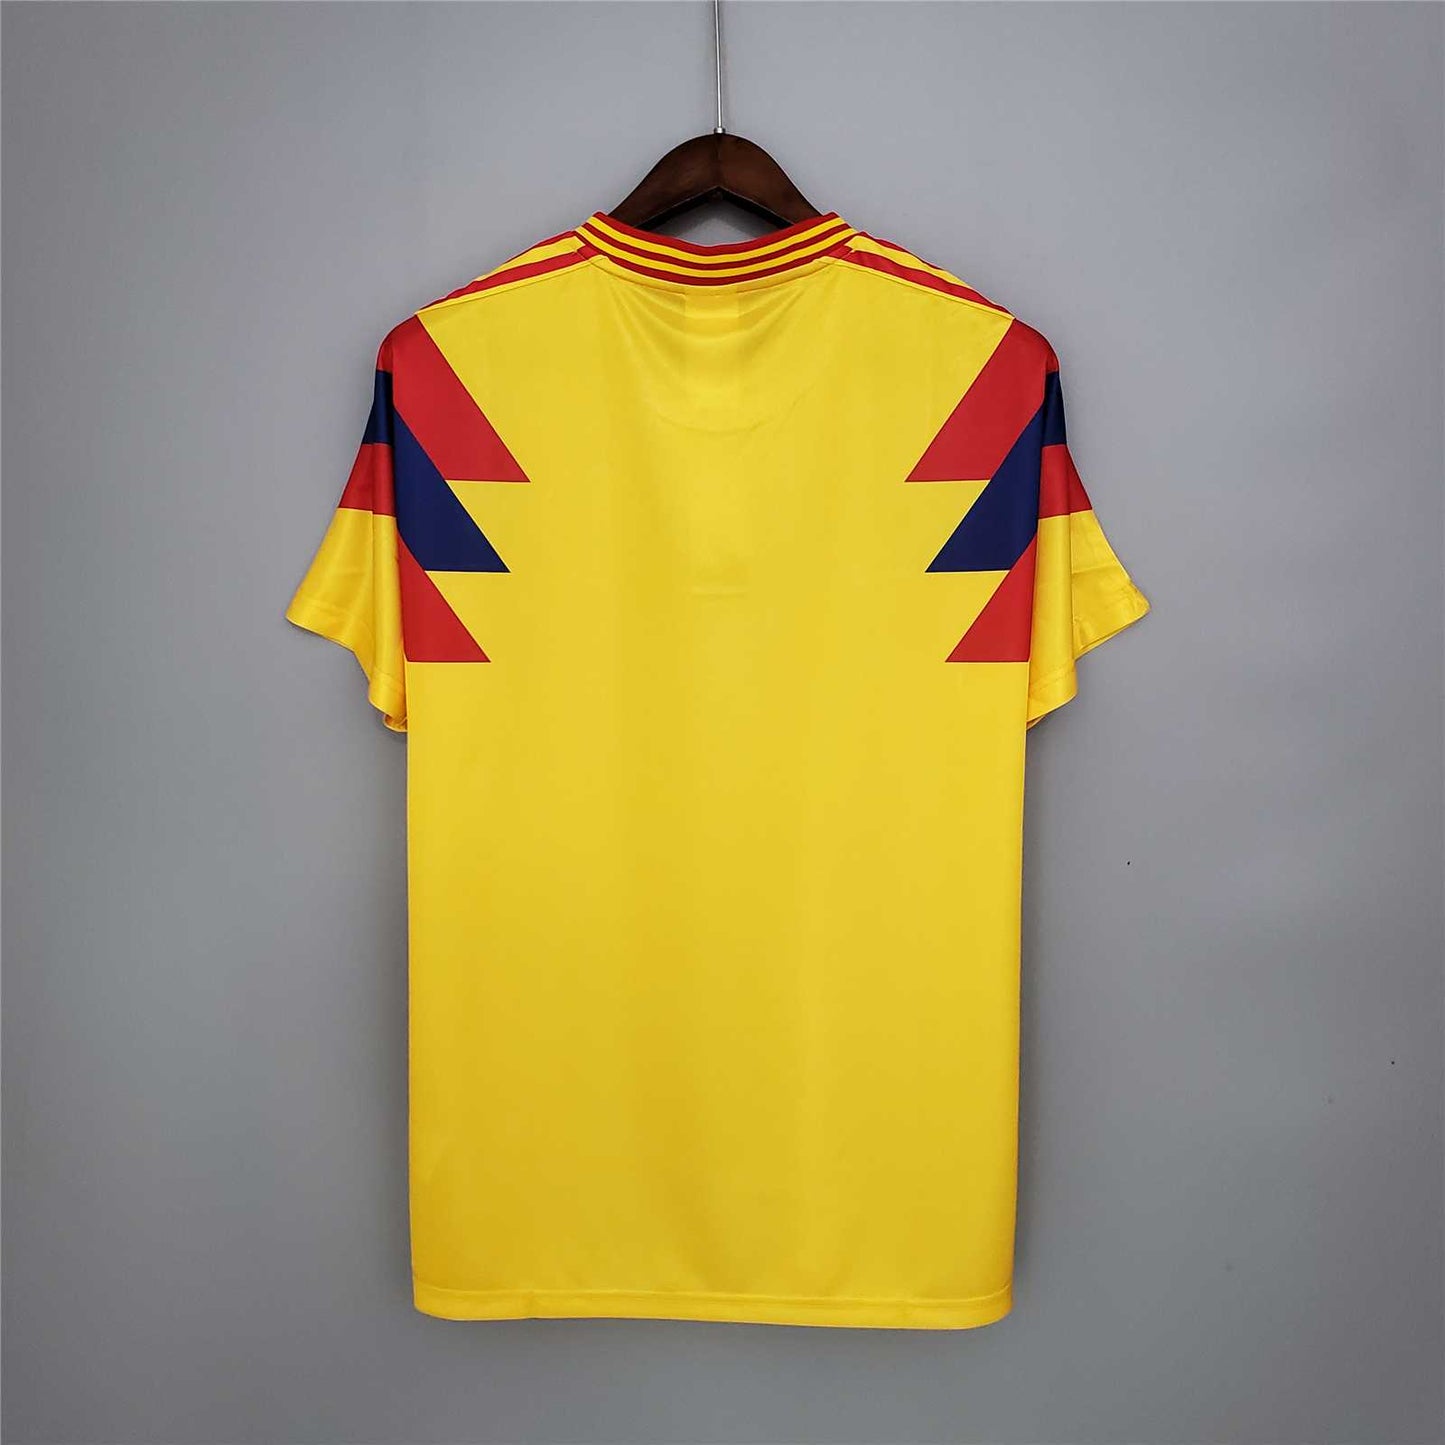 Selección de Colombia. Camiseta local 1990